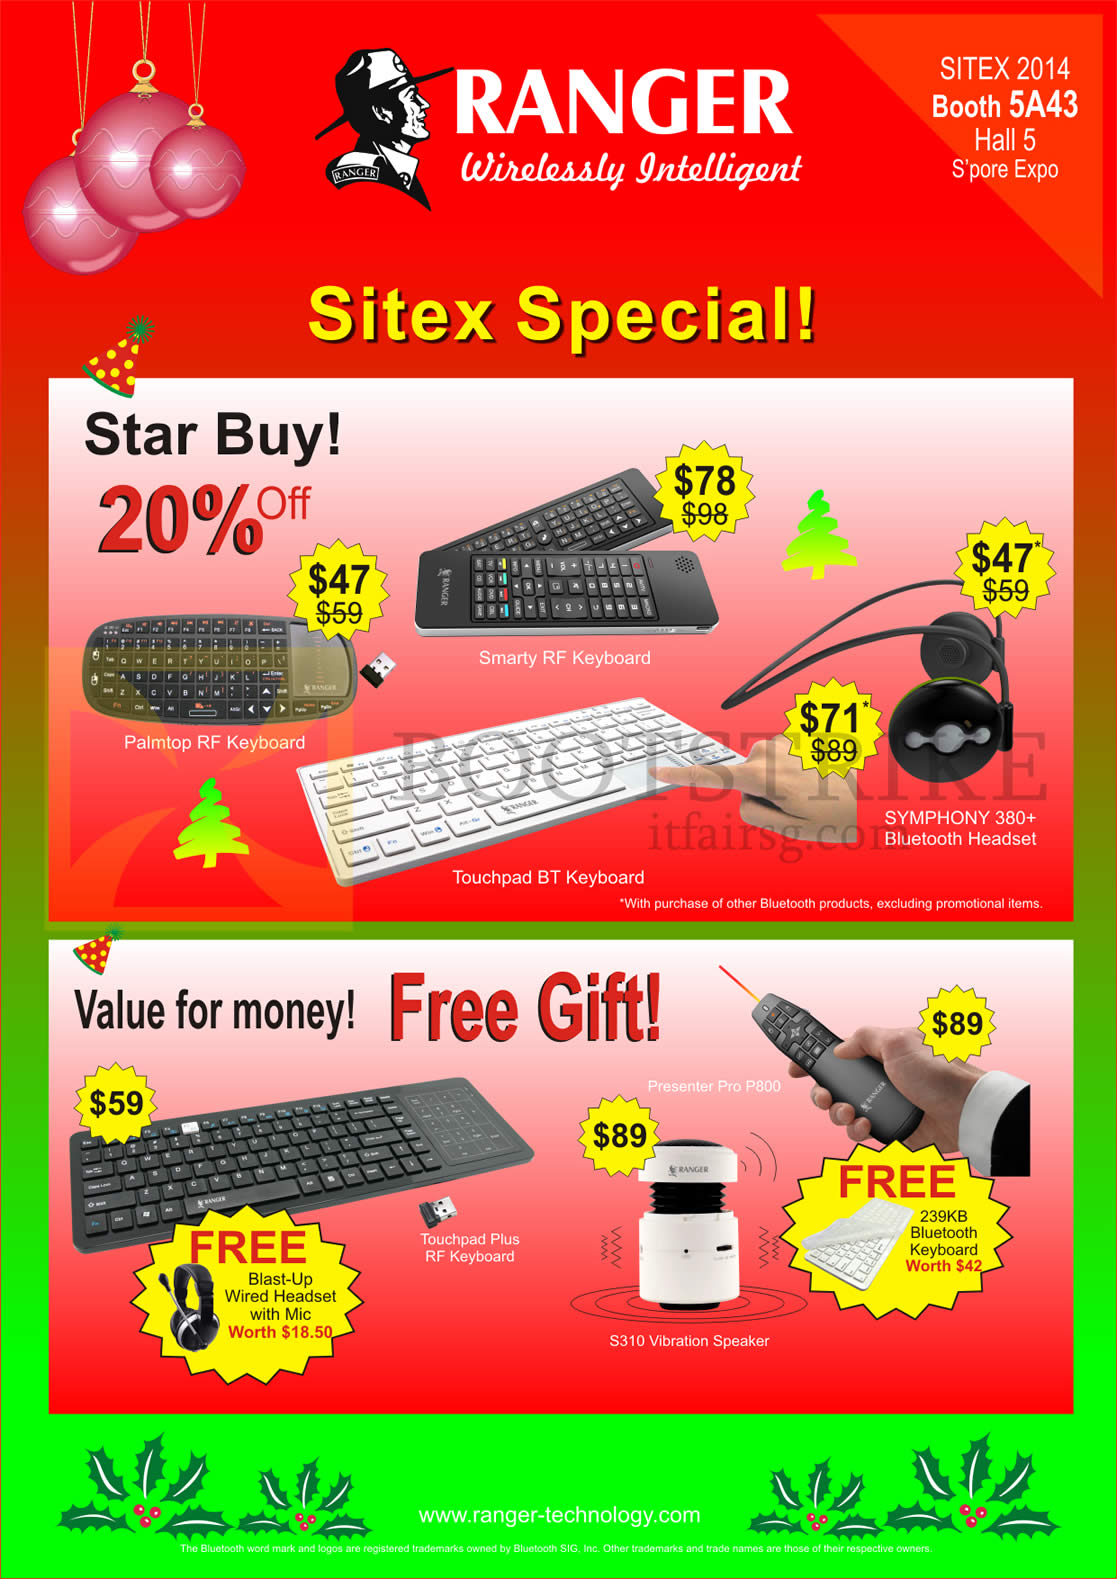 SITEX 2014 price list image brochure of Ranger Keyboards, Vibration Speaker, Bluetooth Headset